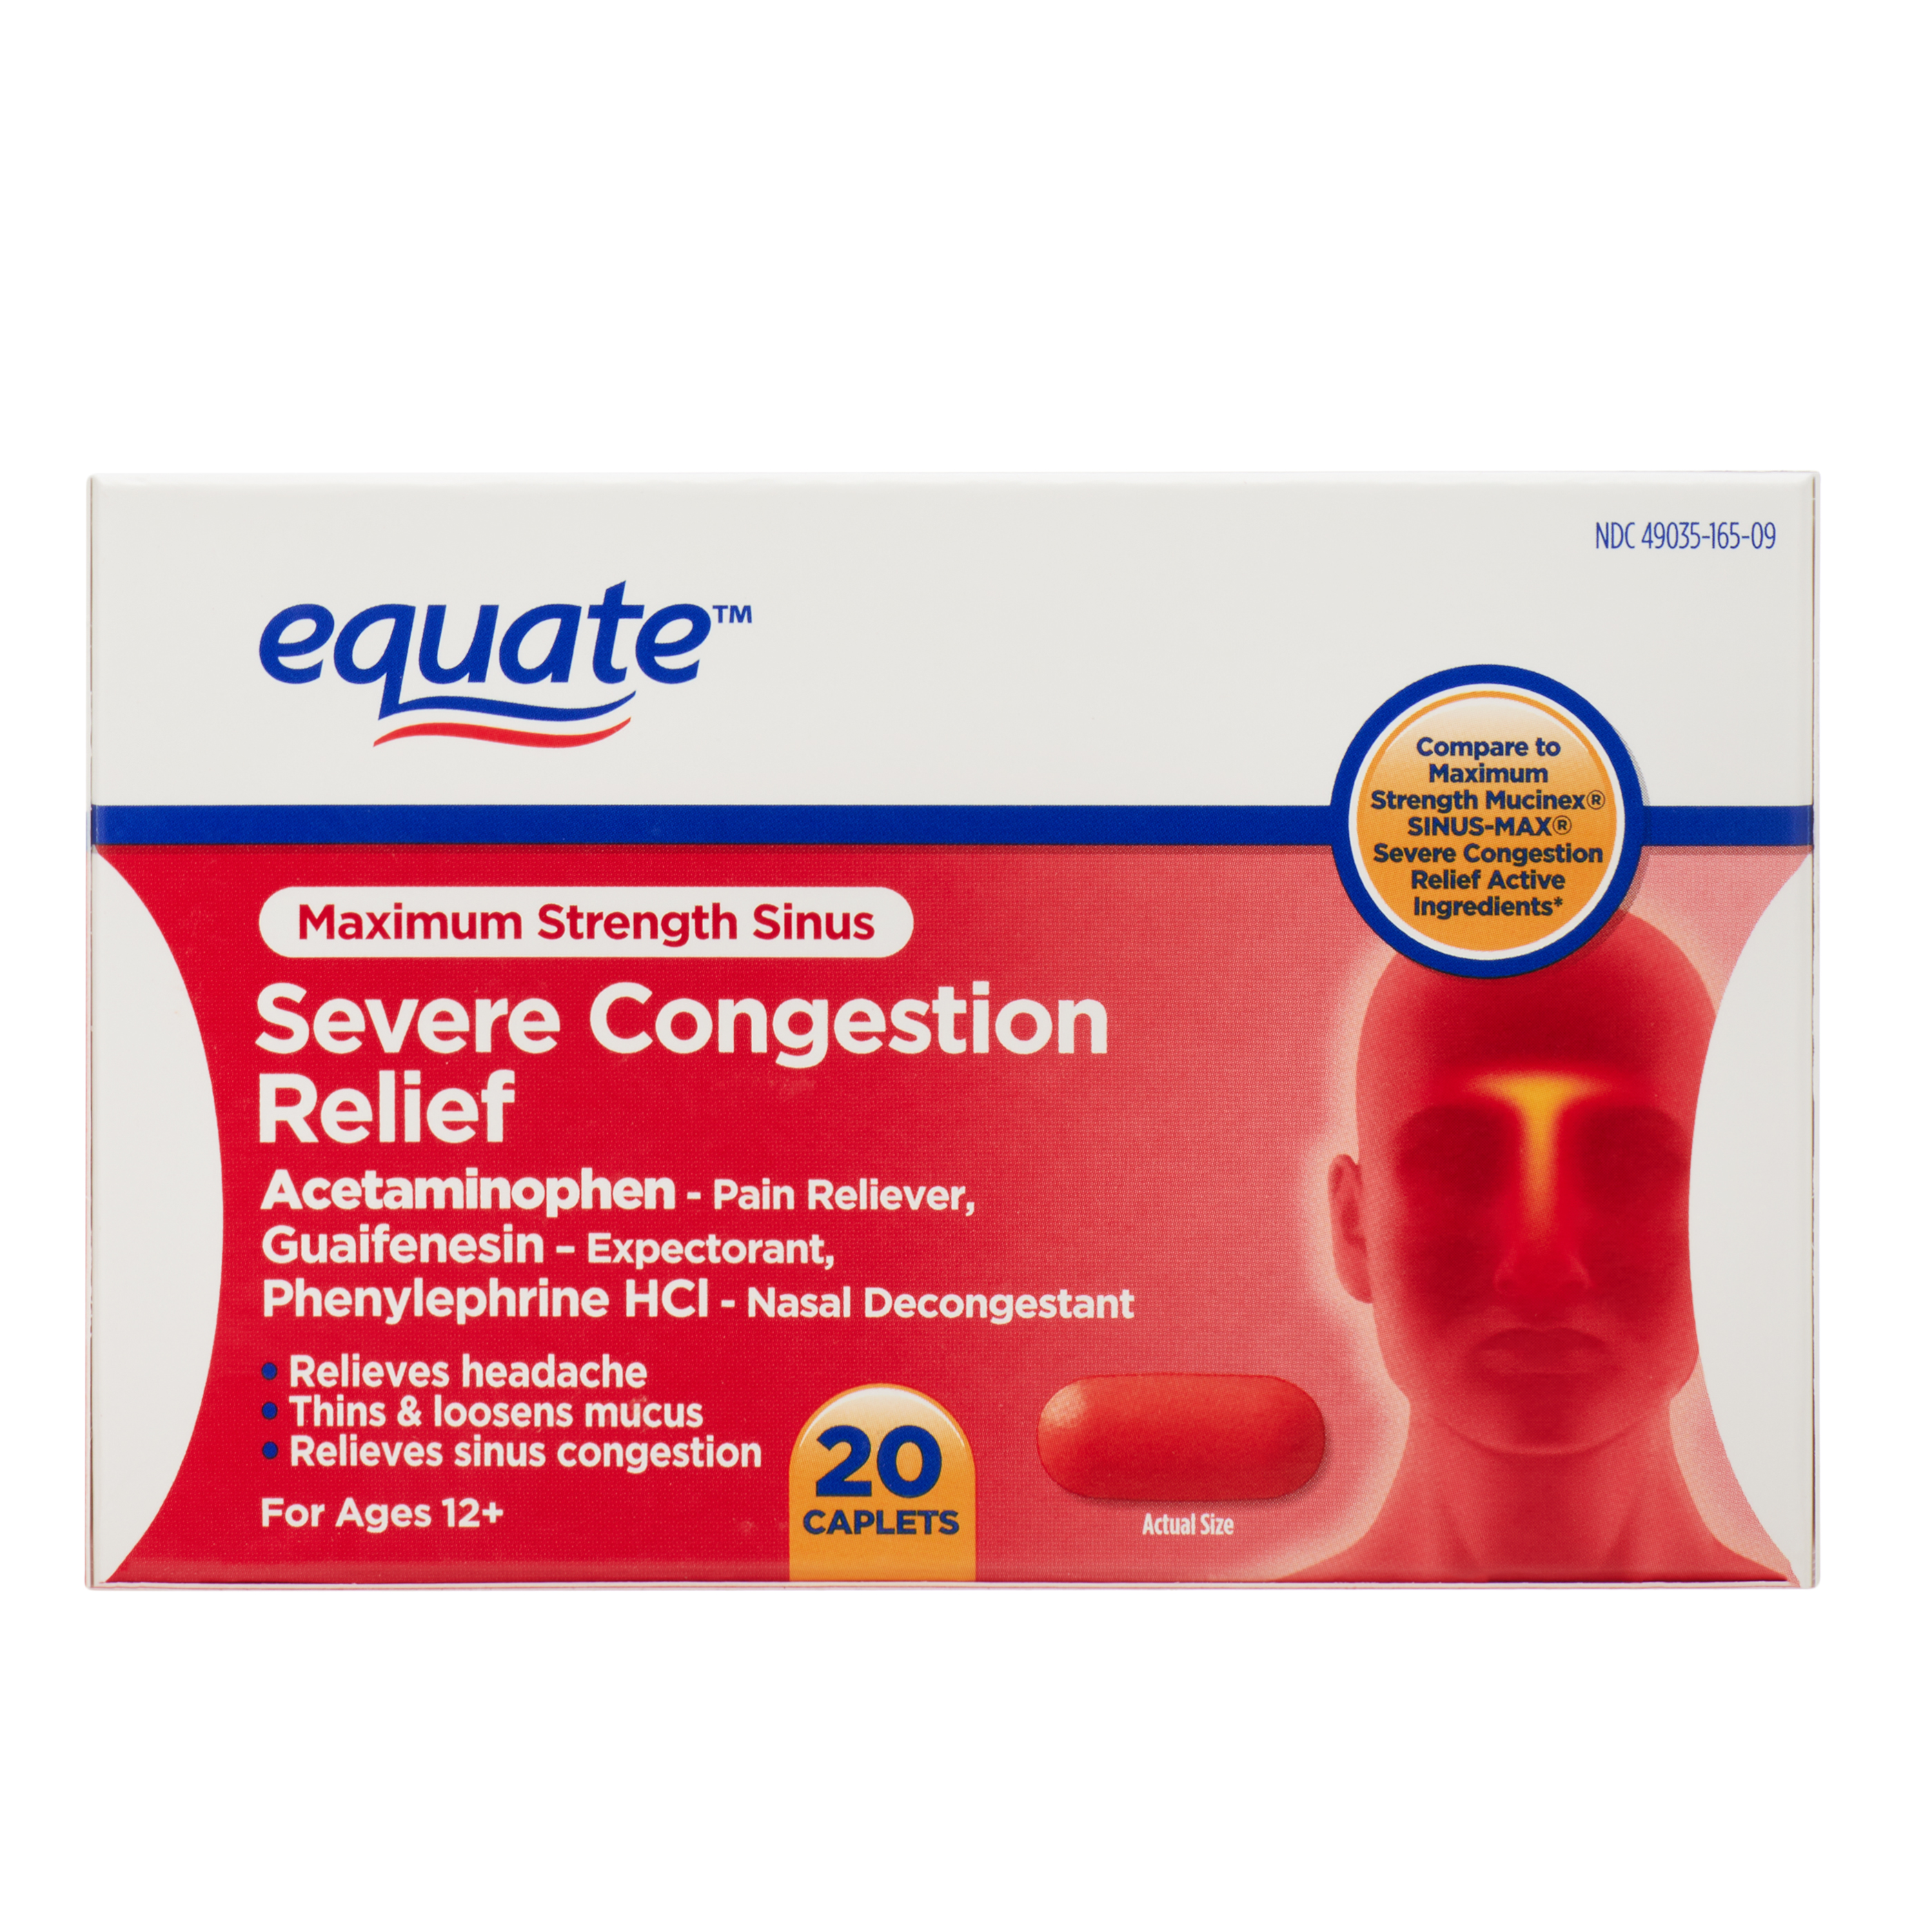 Equate Maximum Strength Sinus Severe Congestion Relief Caplets, 20 Count - image 1 of 7